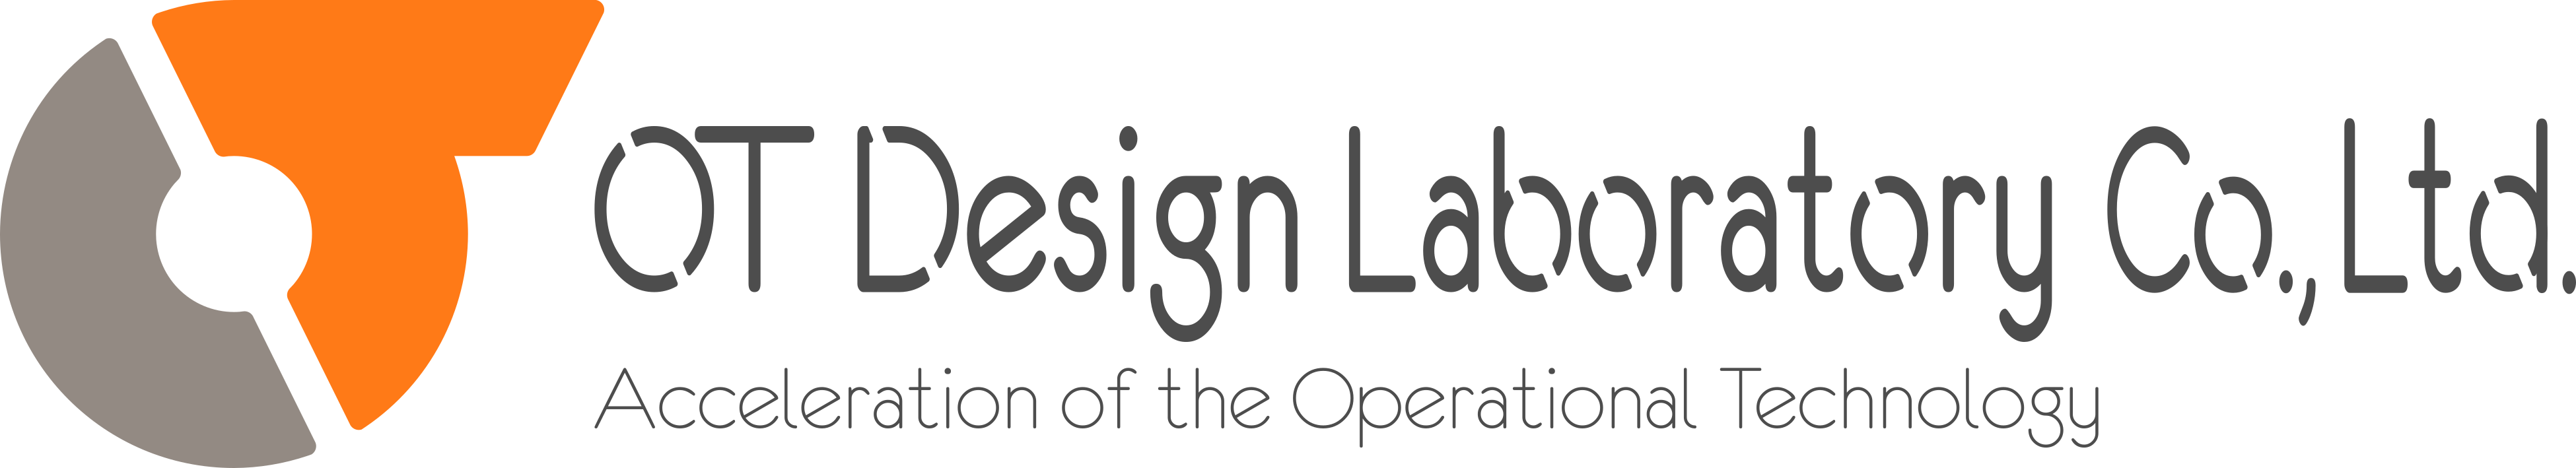 OT Design Laboratory